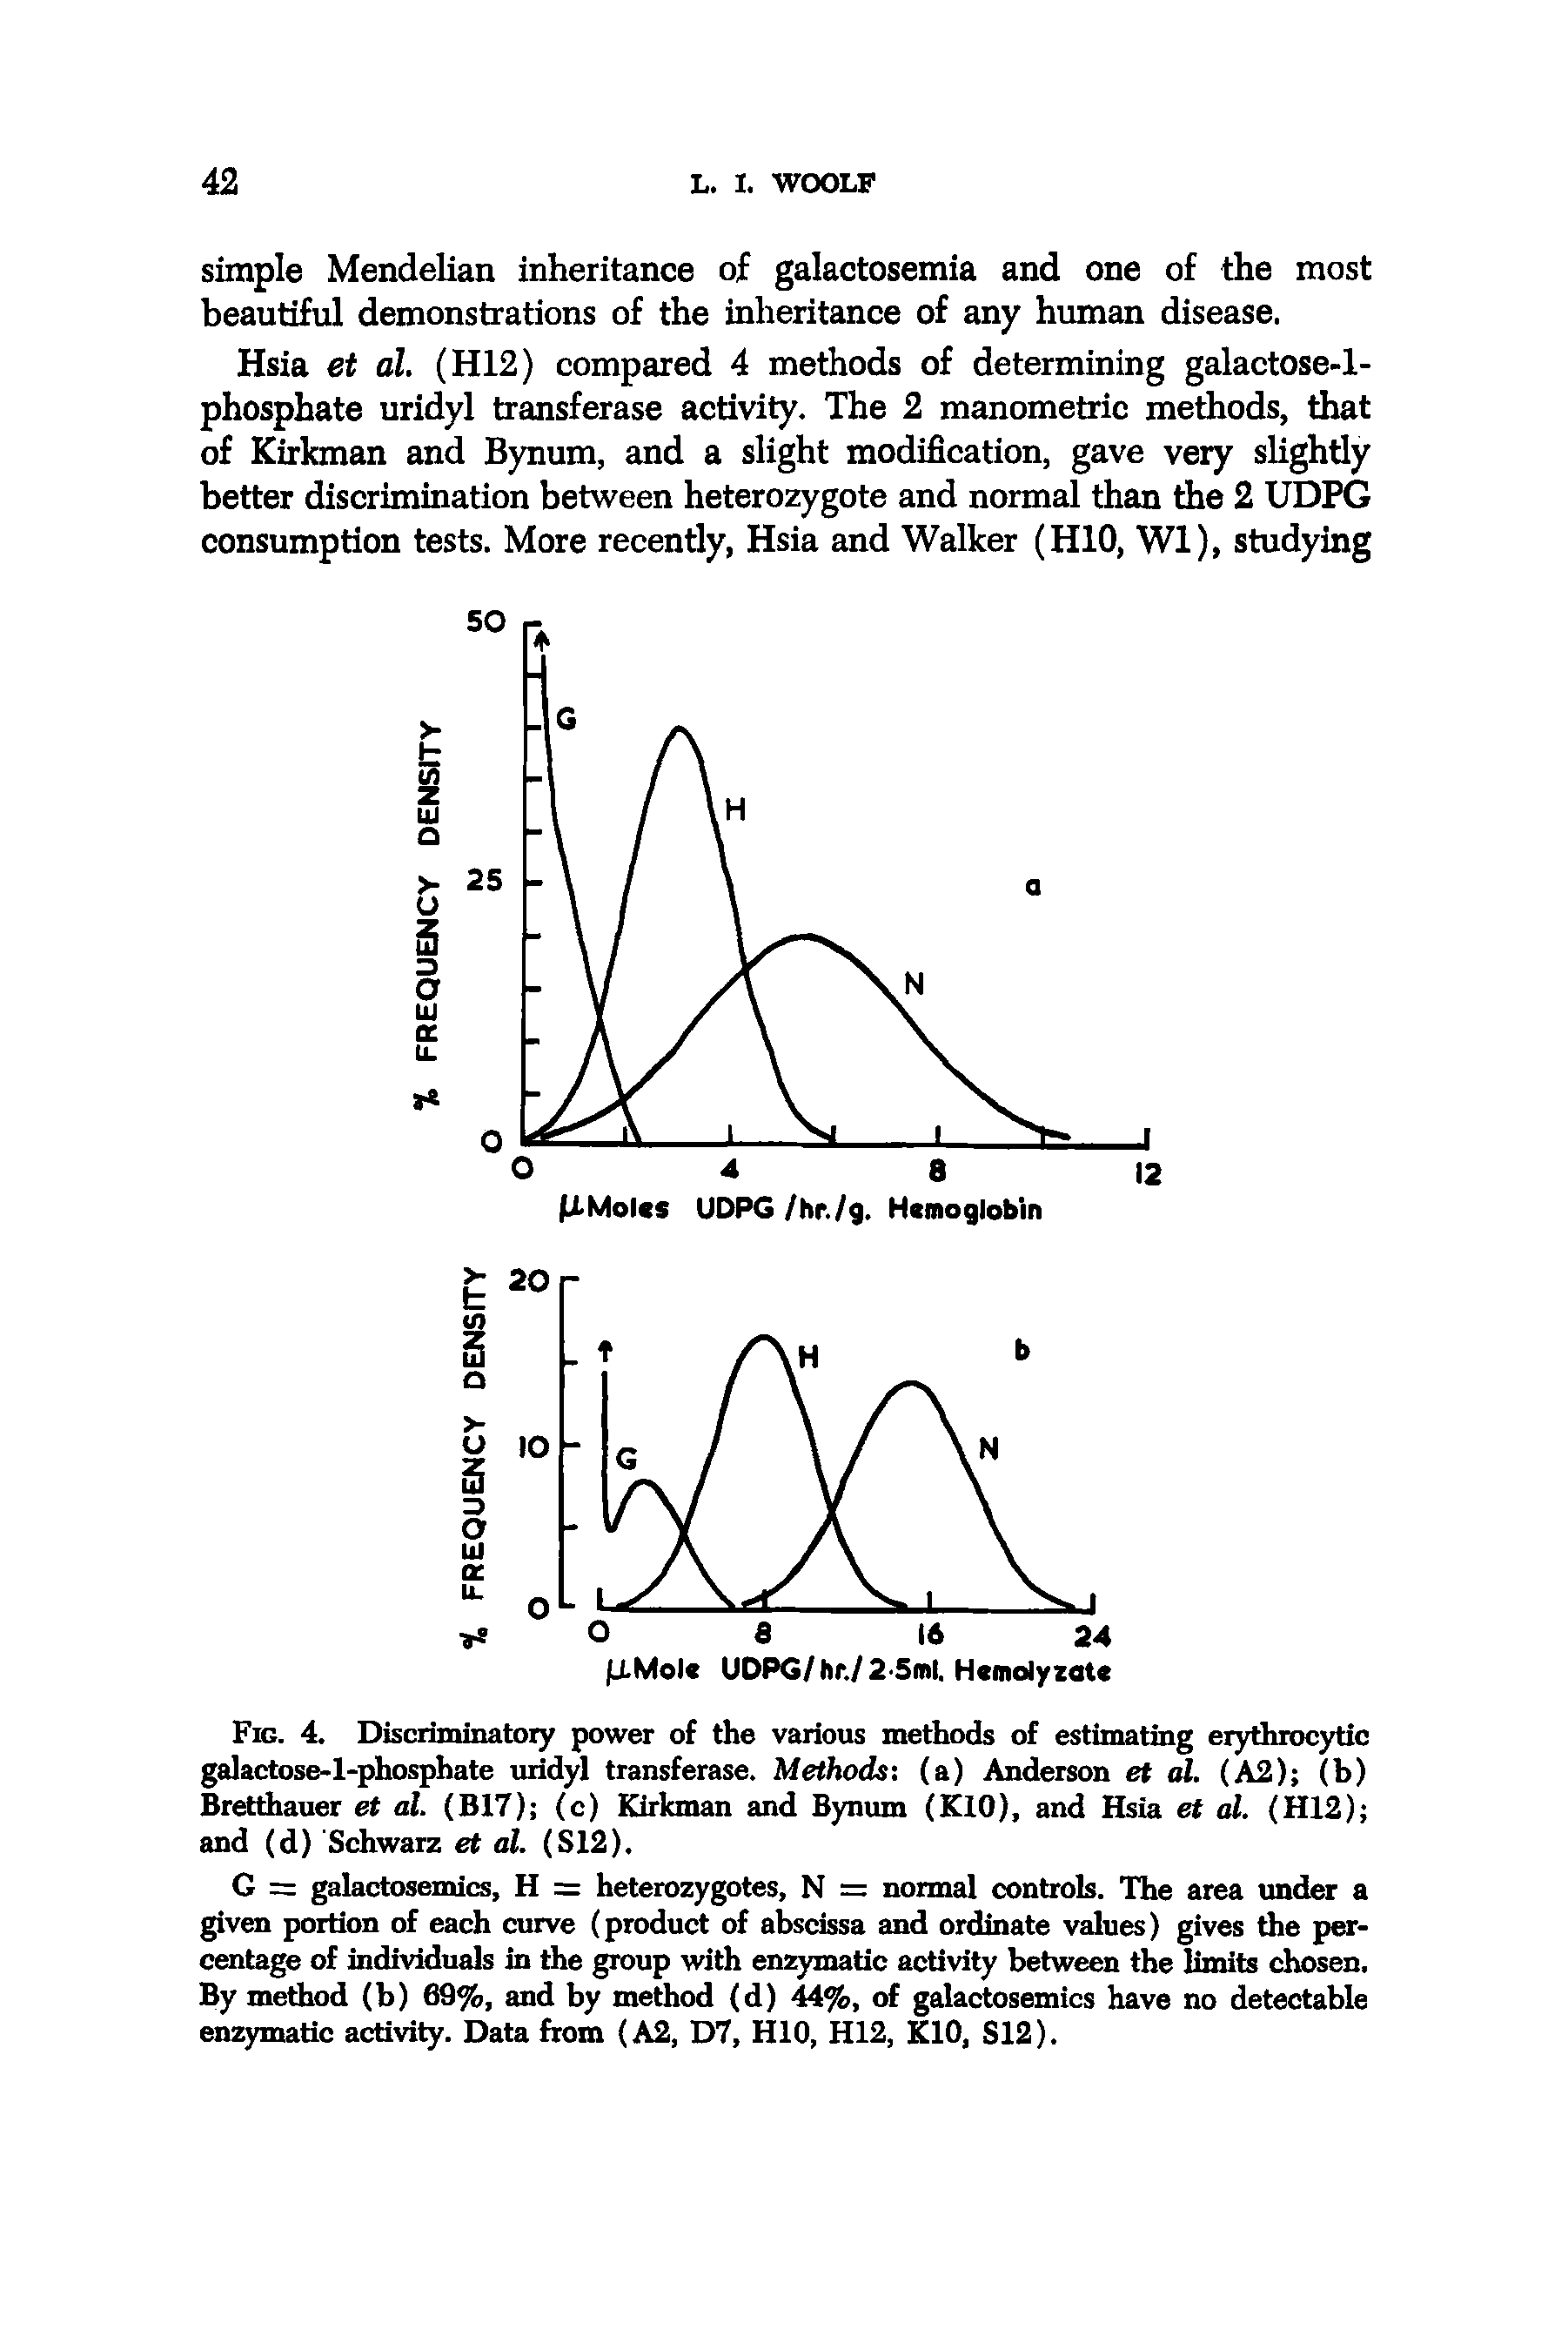 Fig. 4. Discriminatory power of the various methods of estimating erythrocytic galactose-l-phosphate uridyl transferase. Methods (a) Anderson et al. (A2) (b) Bretthauer et al. (B17) (c) Kirkman and Bynum (KLO), and Hsia et al. (H12) and (d) Schwarz et al. (S12).